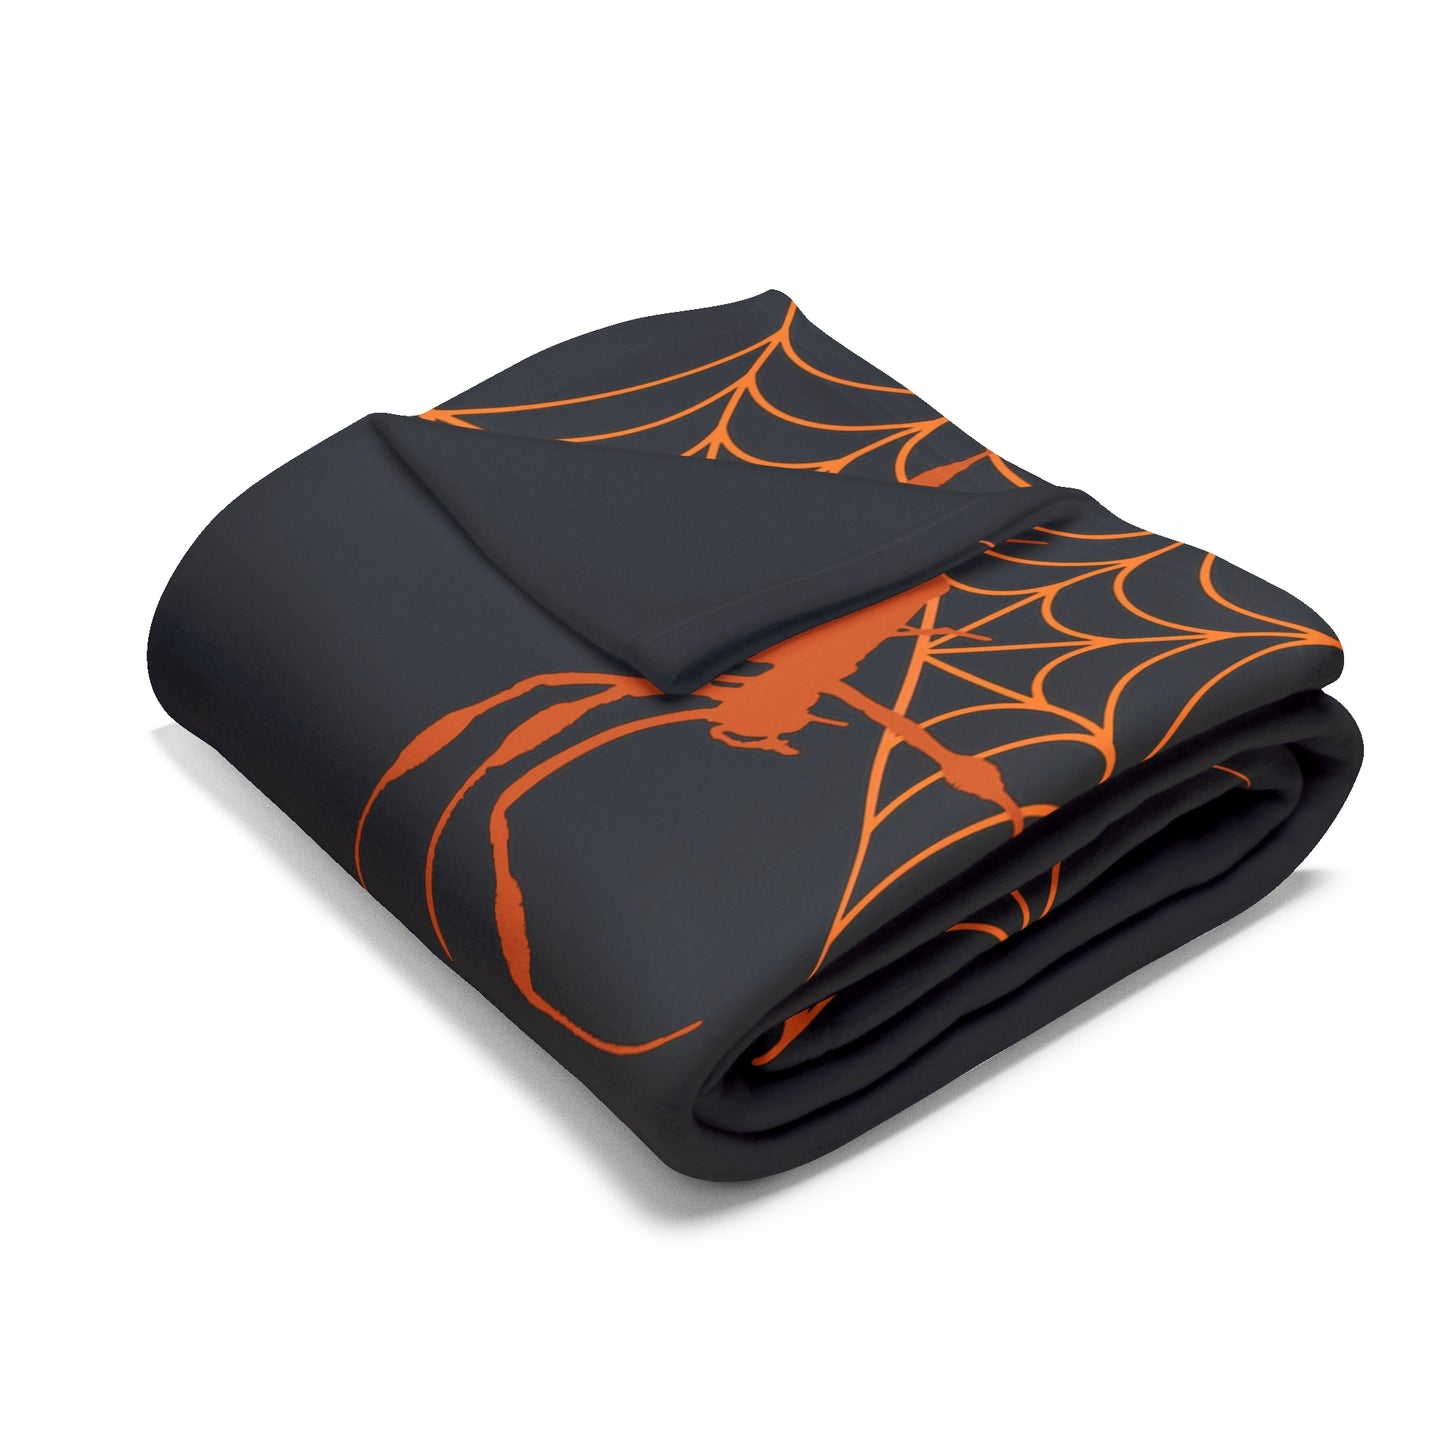 Spiders in Pumpkin | Microfiber Blanket